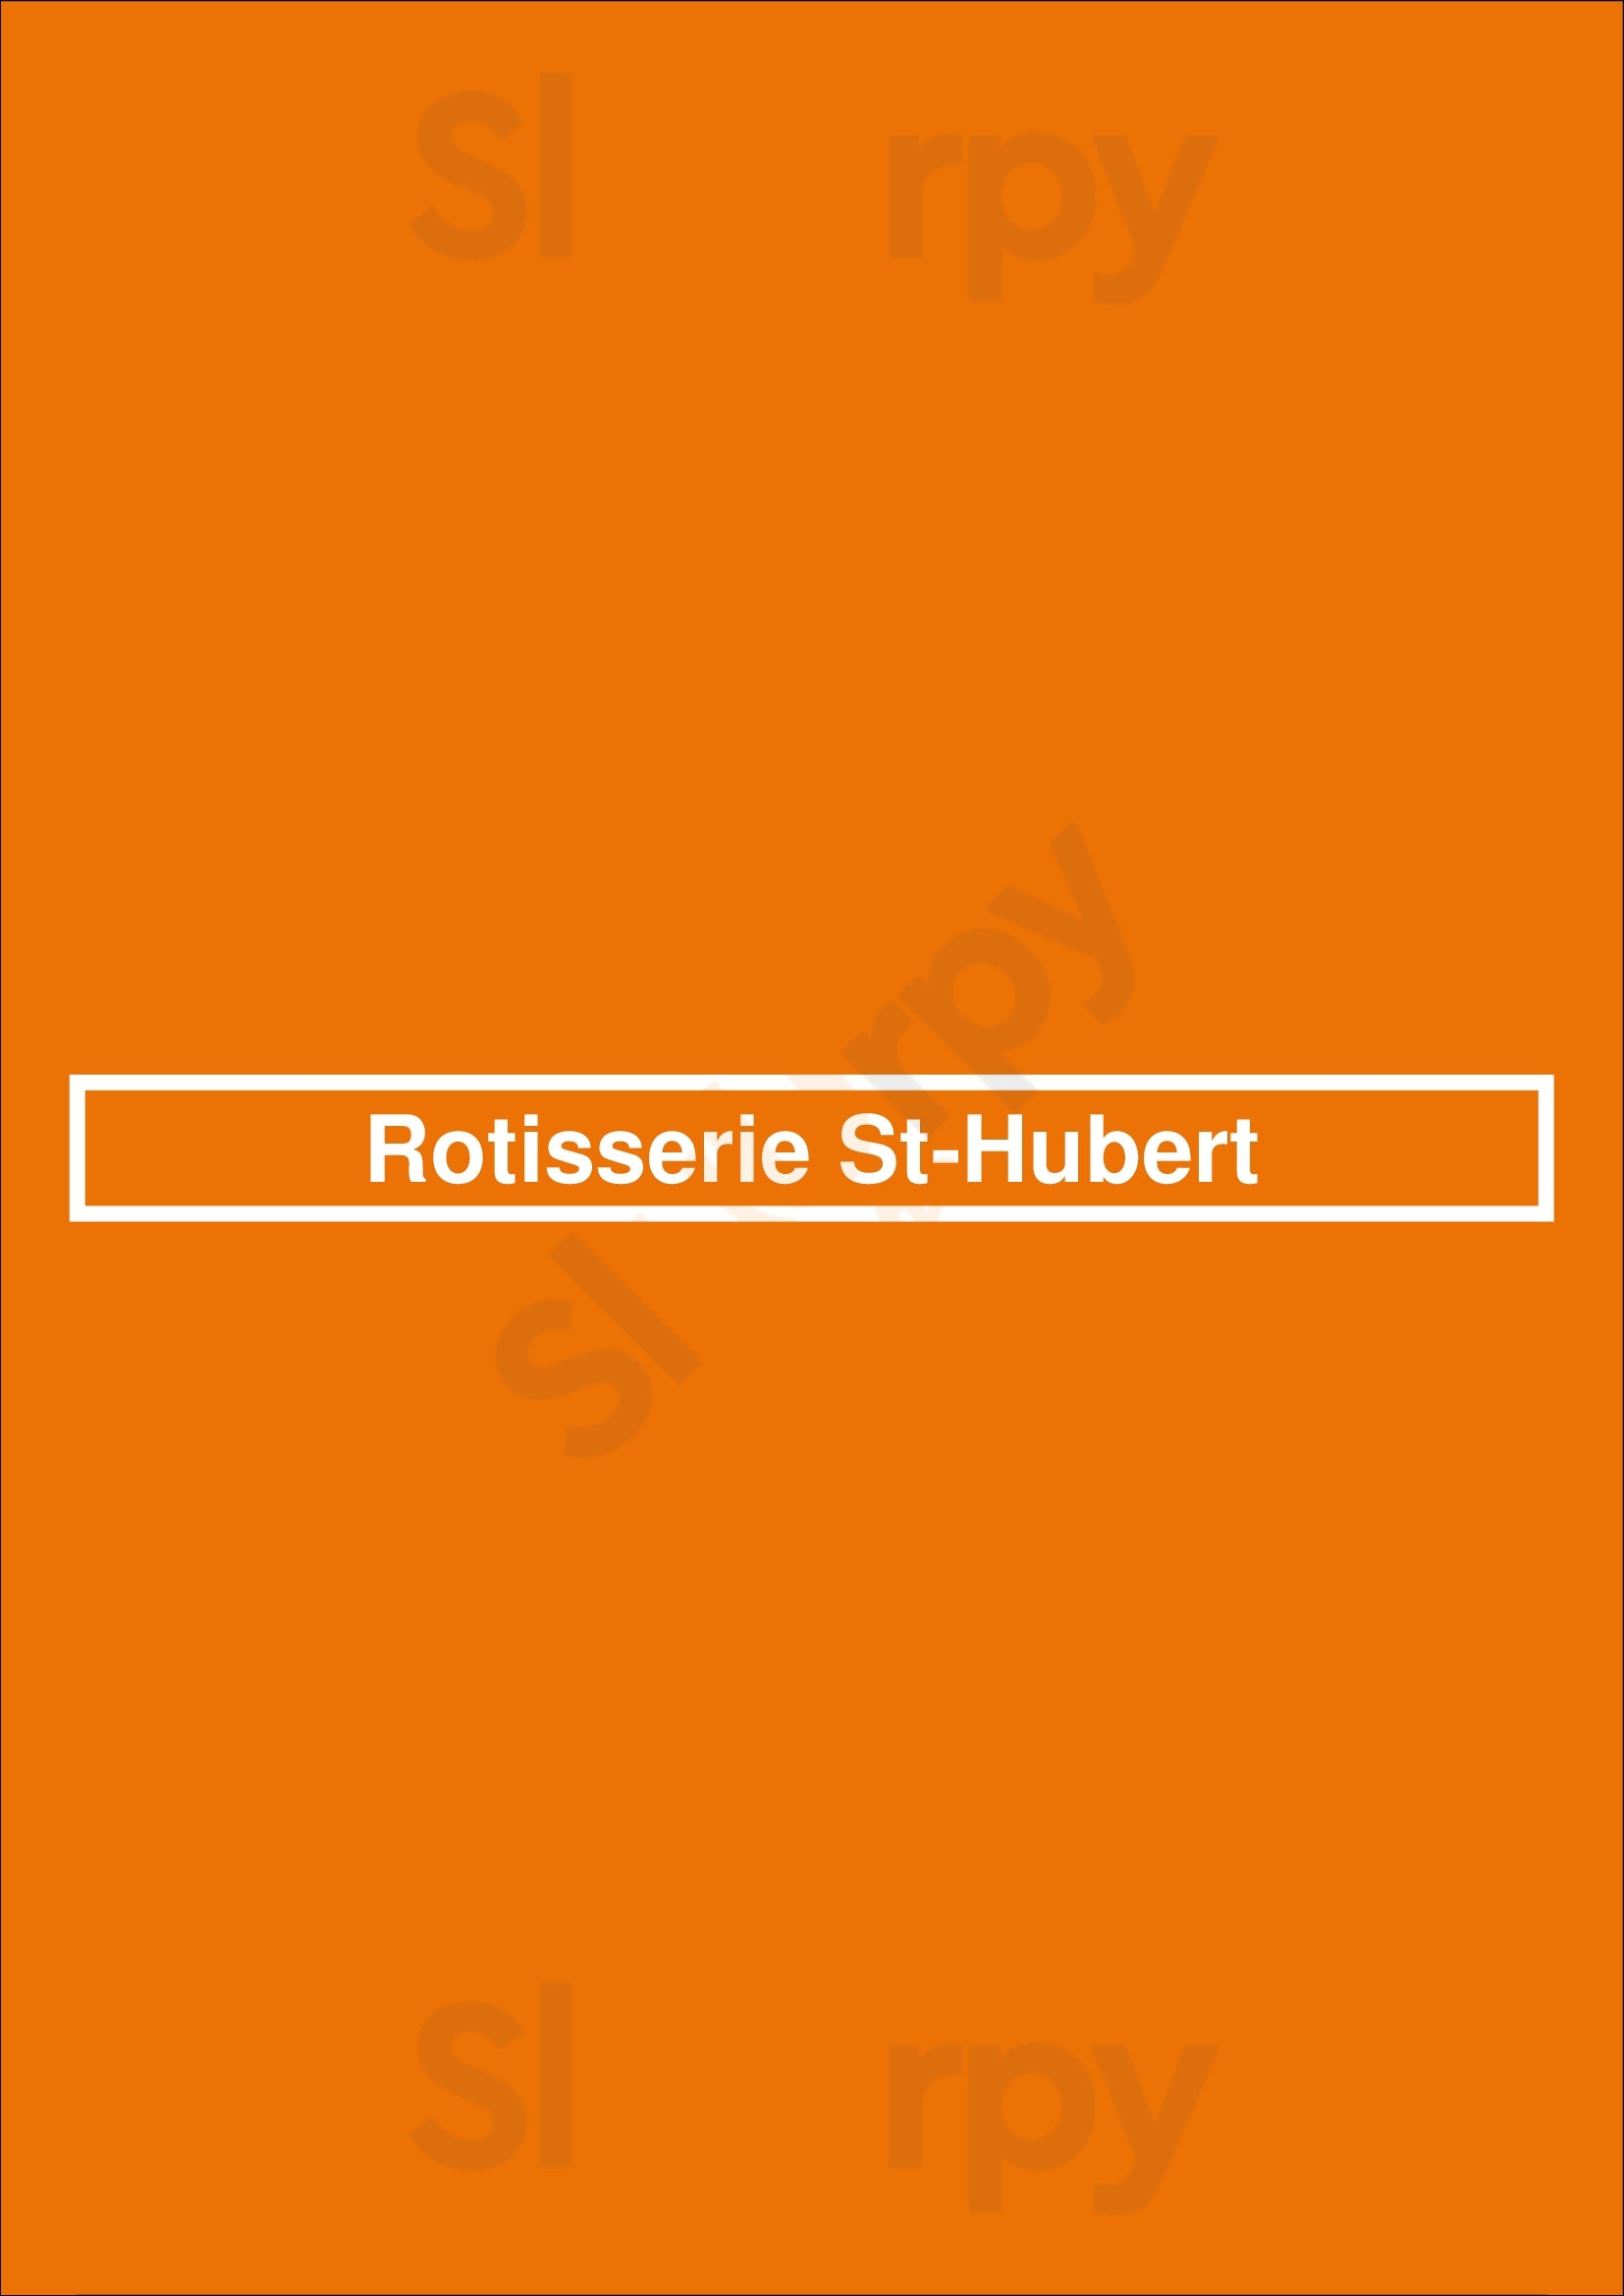 Rotisserie St-hubert Saint-Eustache Menu - 1